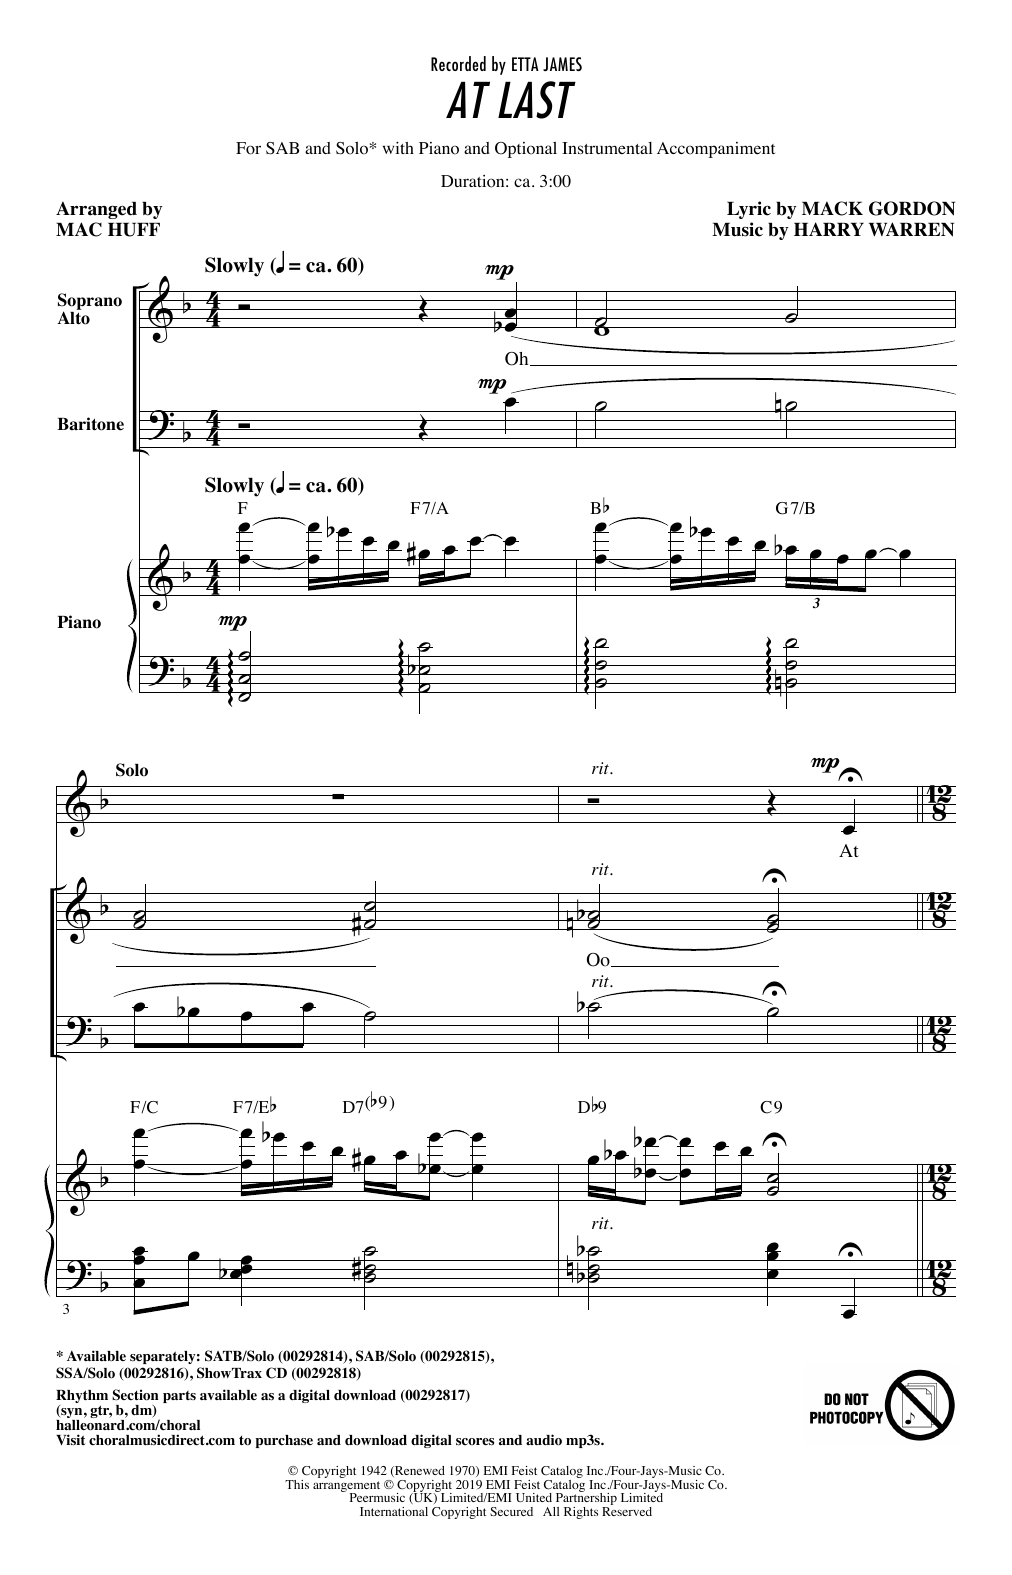 Etta James At Last (arr. Mac Huff) Sheet Music Notes & Chords for SAB Choir - Download or Print PDF